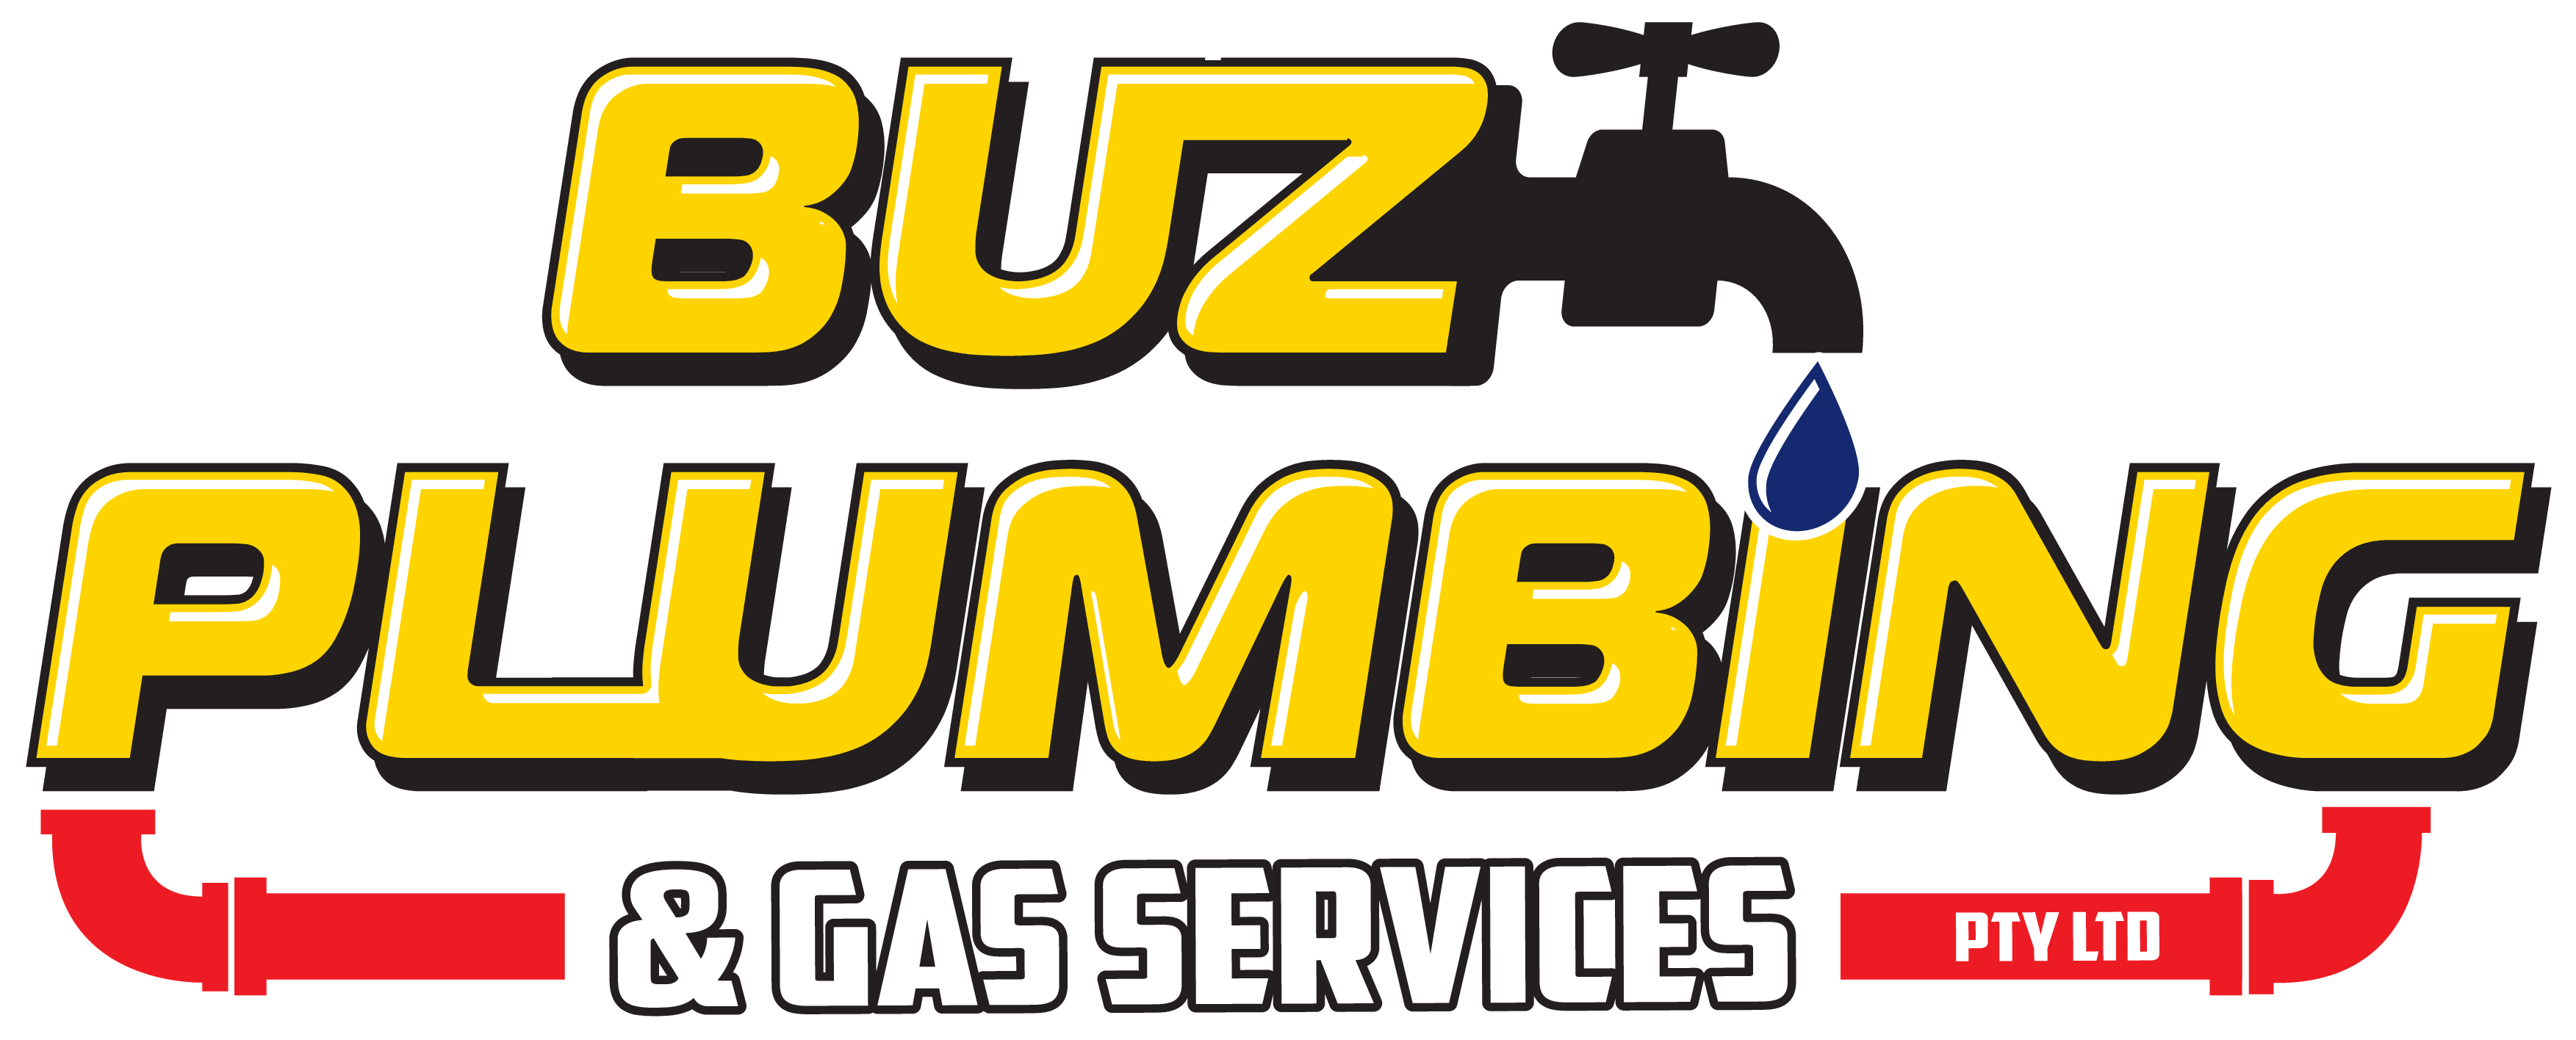 buz logo